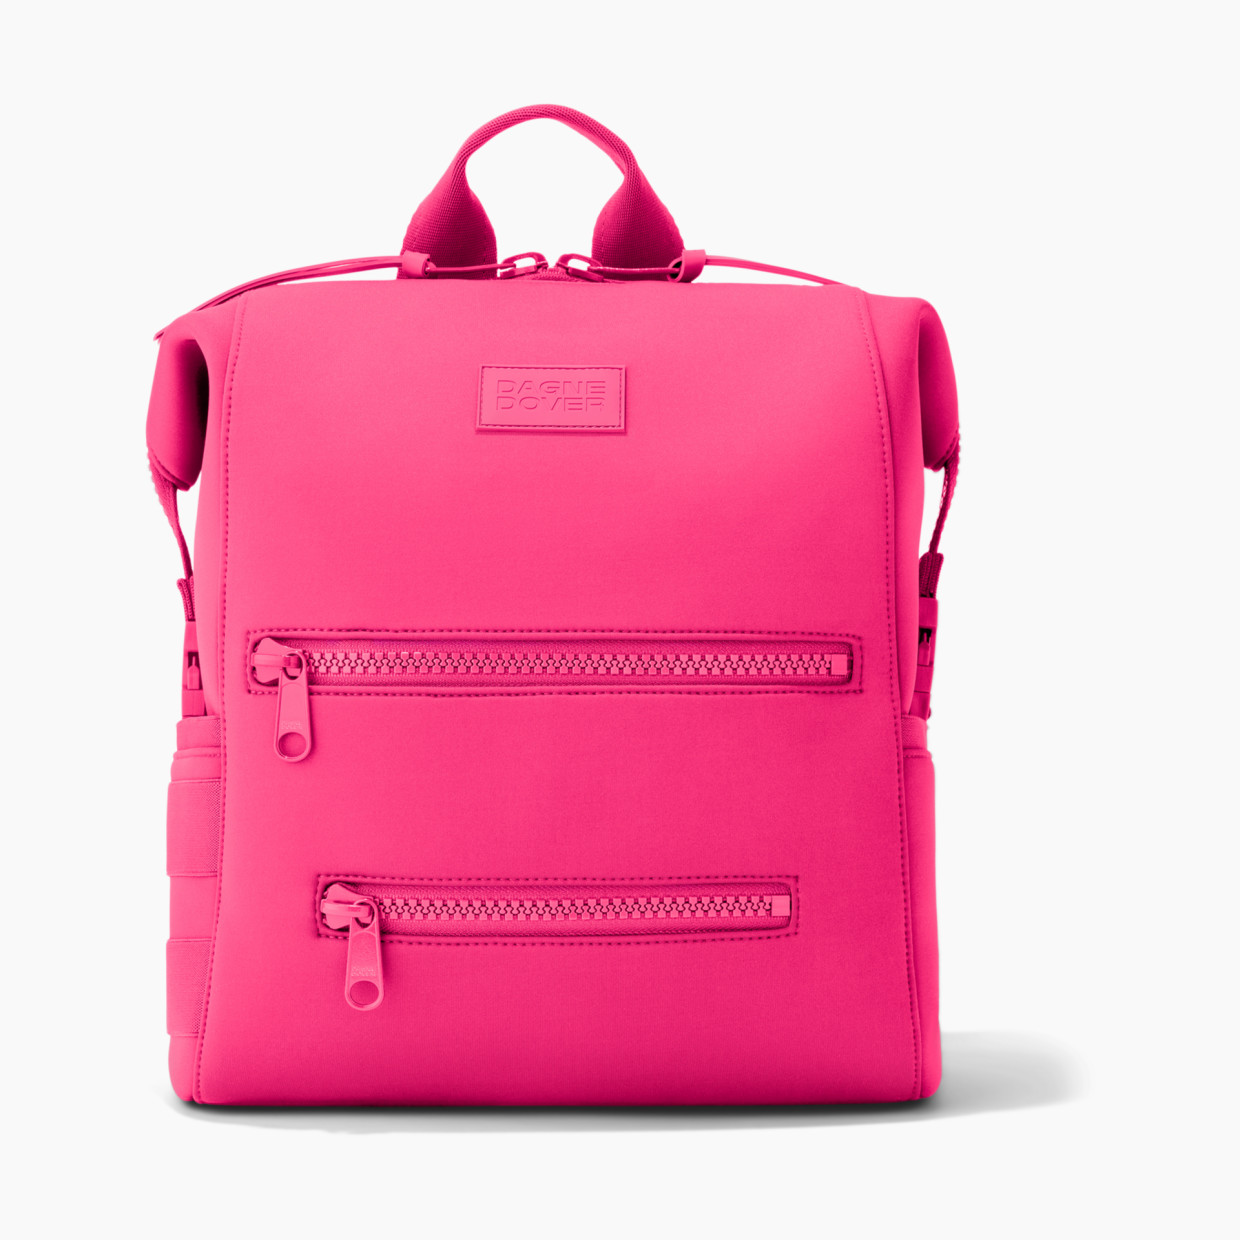 Dagne Dover Indi Diaper Bag Backpack - Hottest Pink (Limited Edition), Medium.